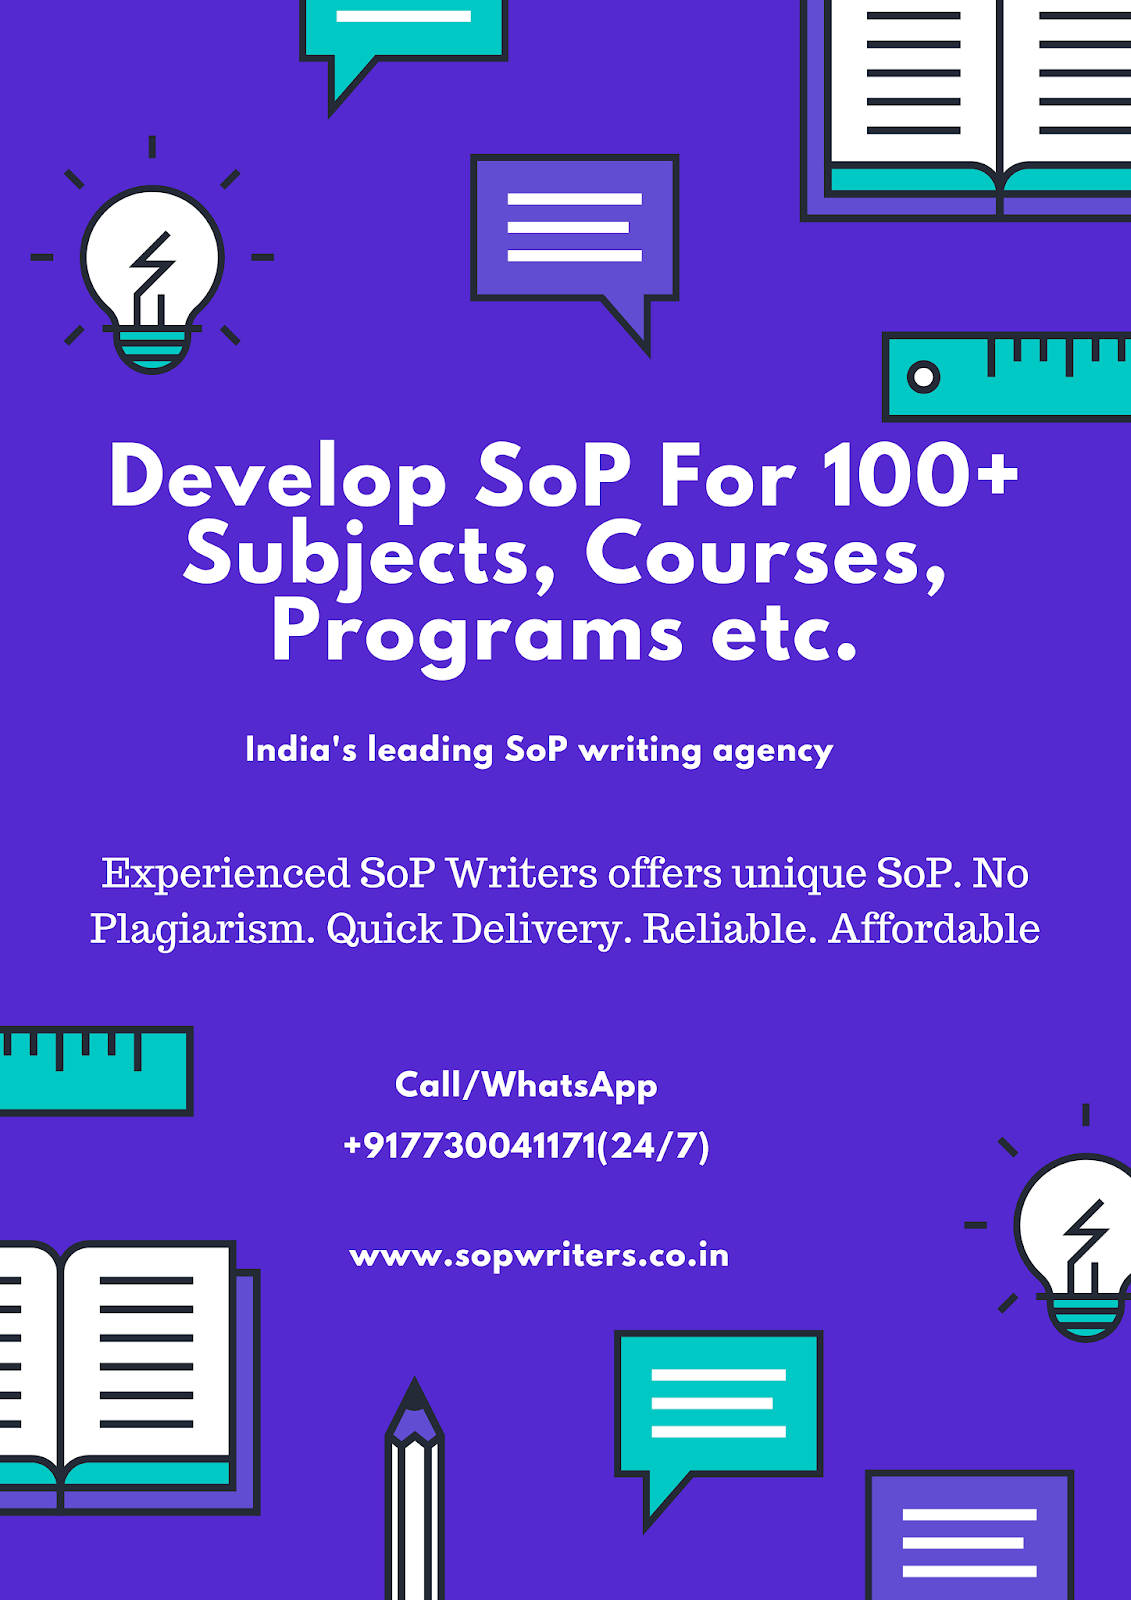 best sop writing services in kerala